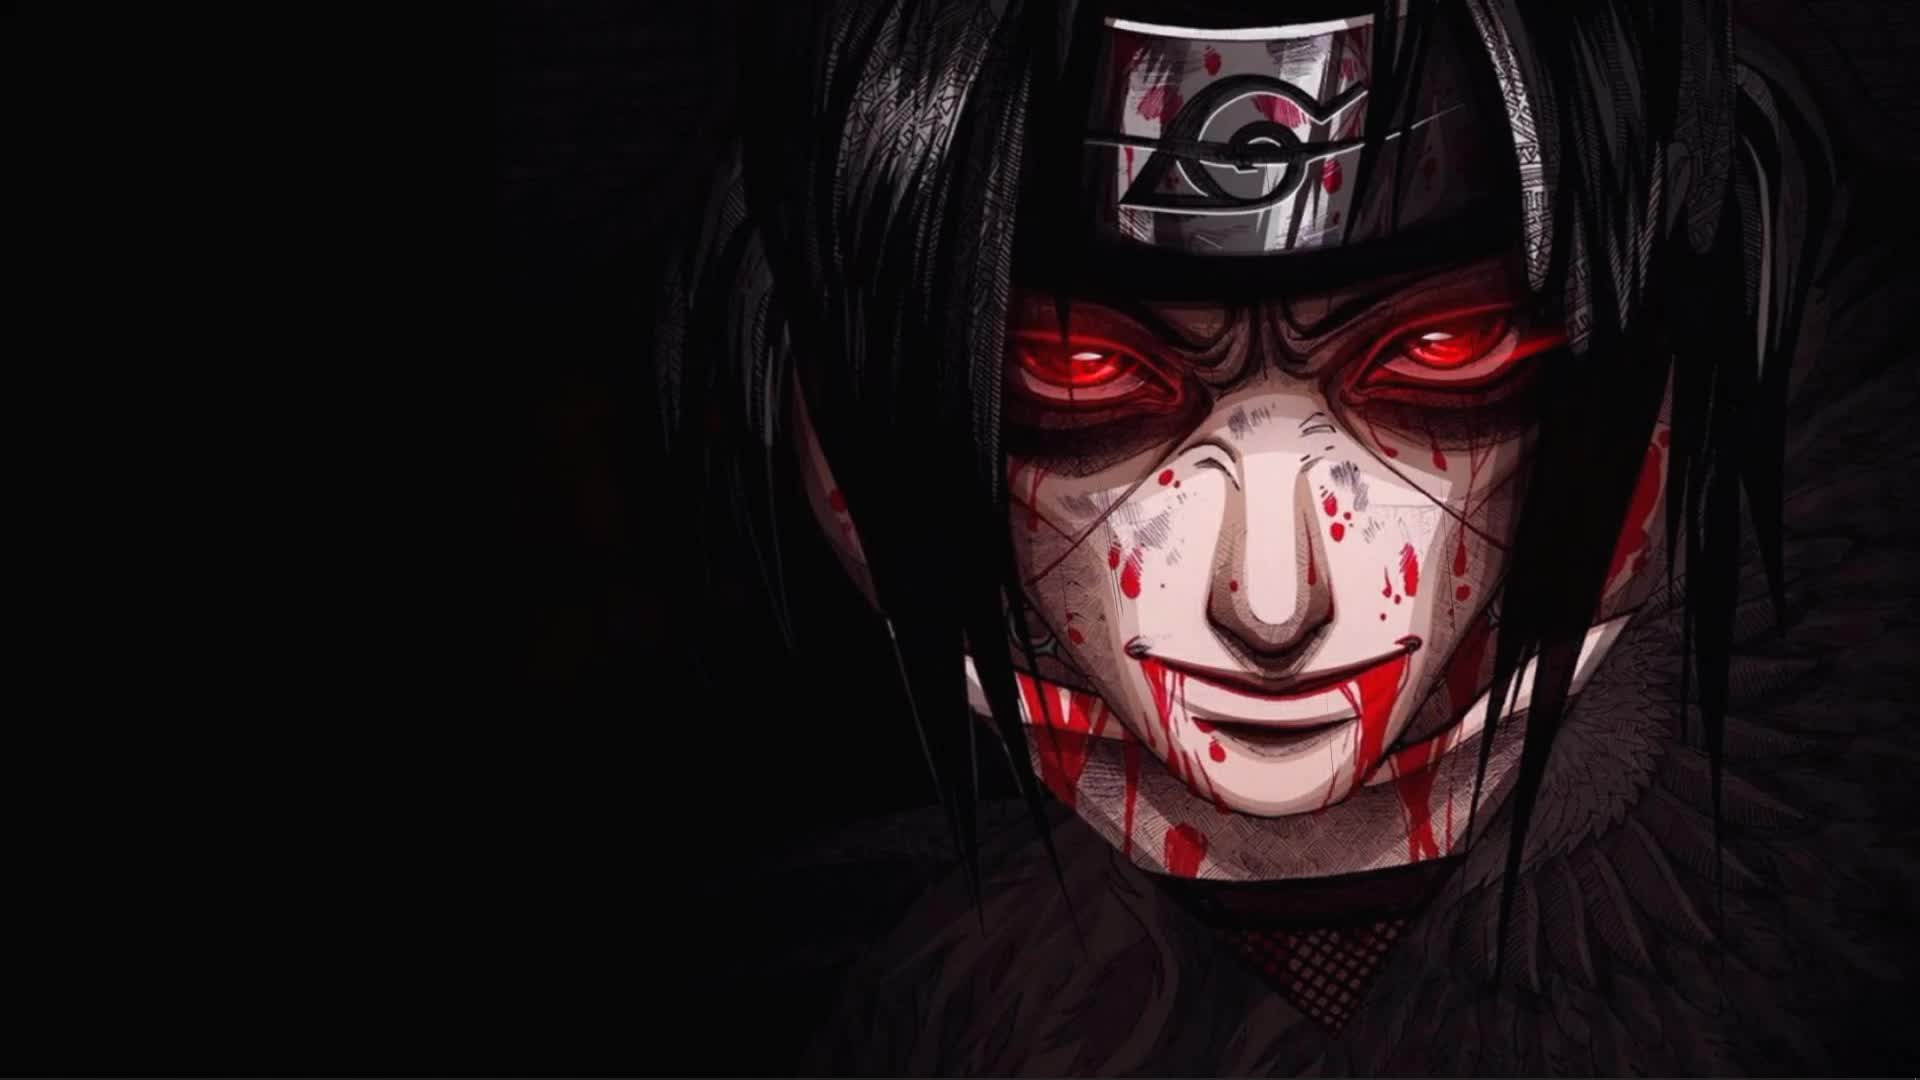 Naruto Uzumaki Wallpapers - Top 35 Best Naruto Uzumaki Backgrounds Download